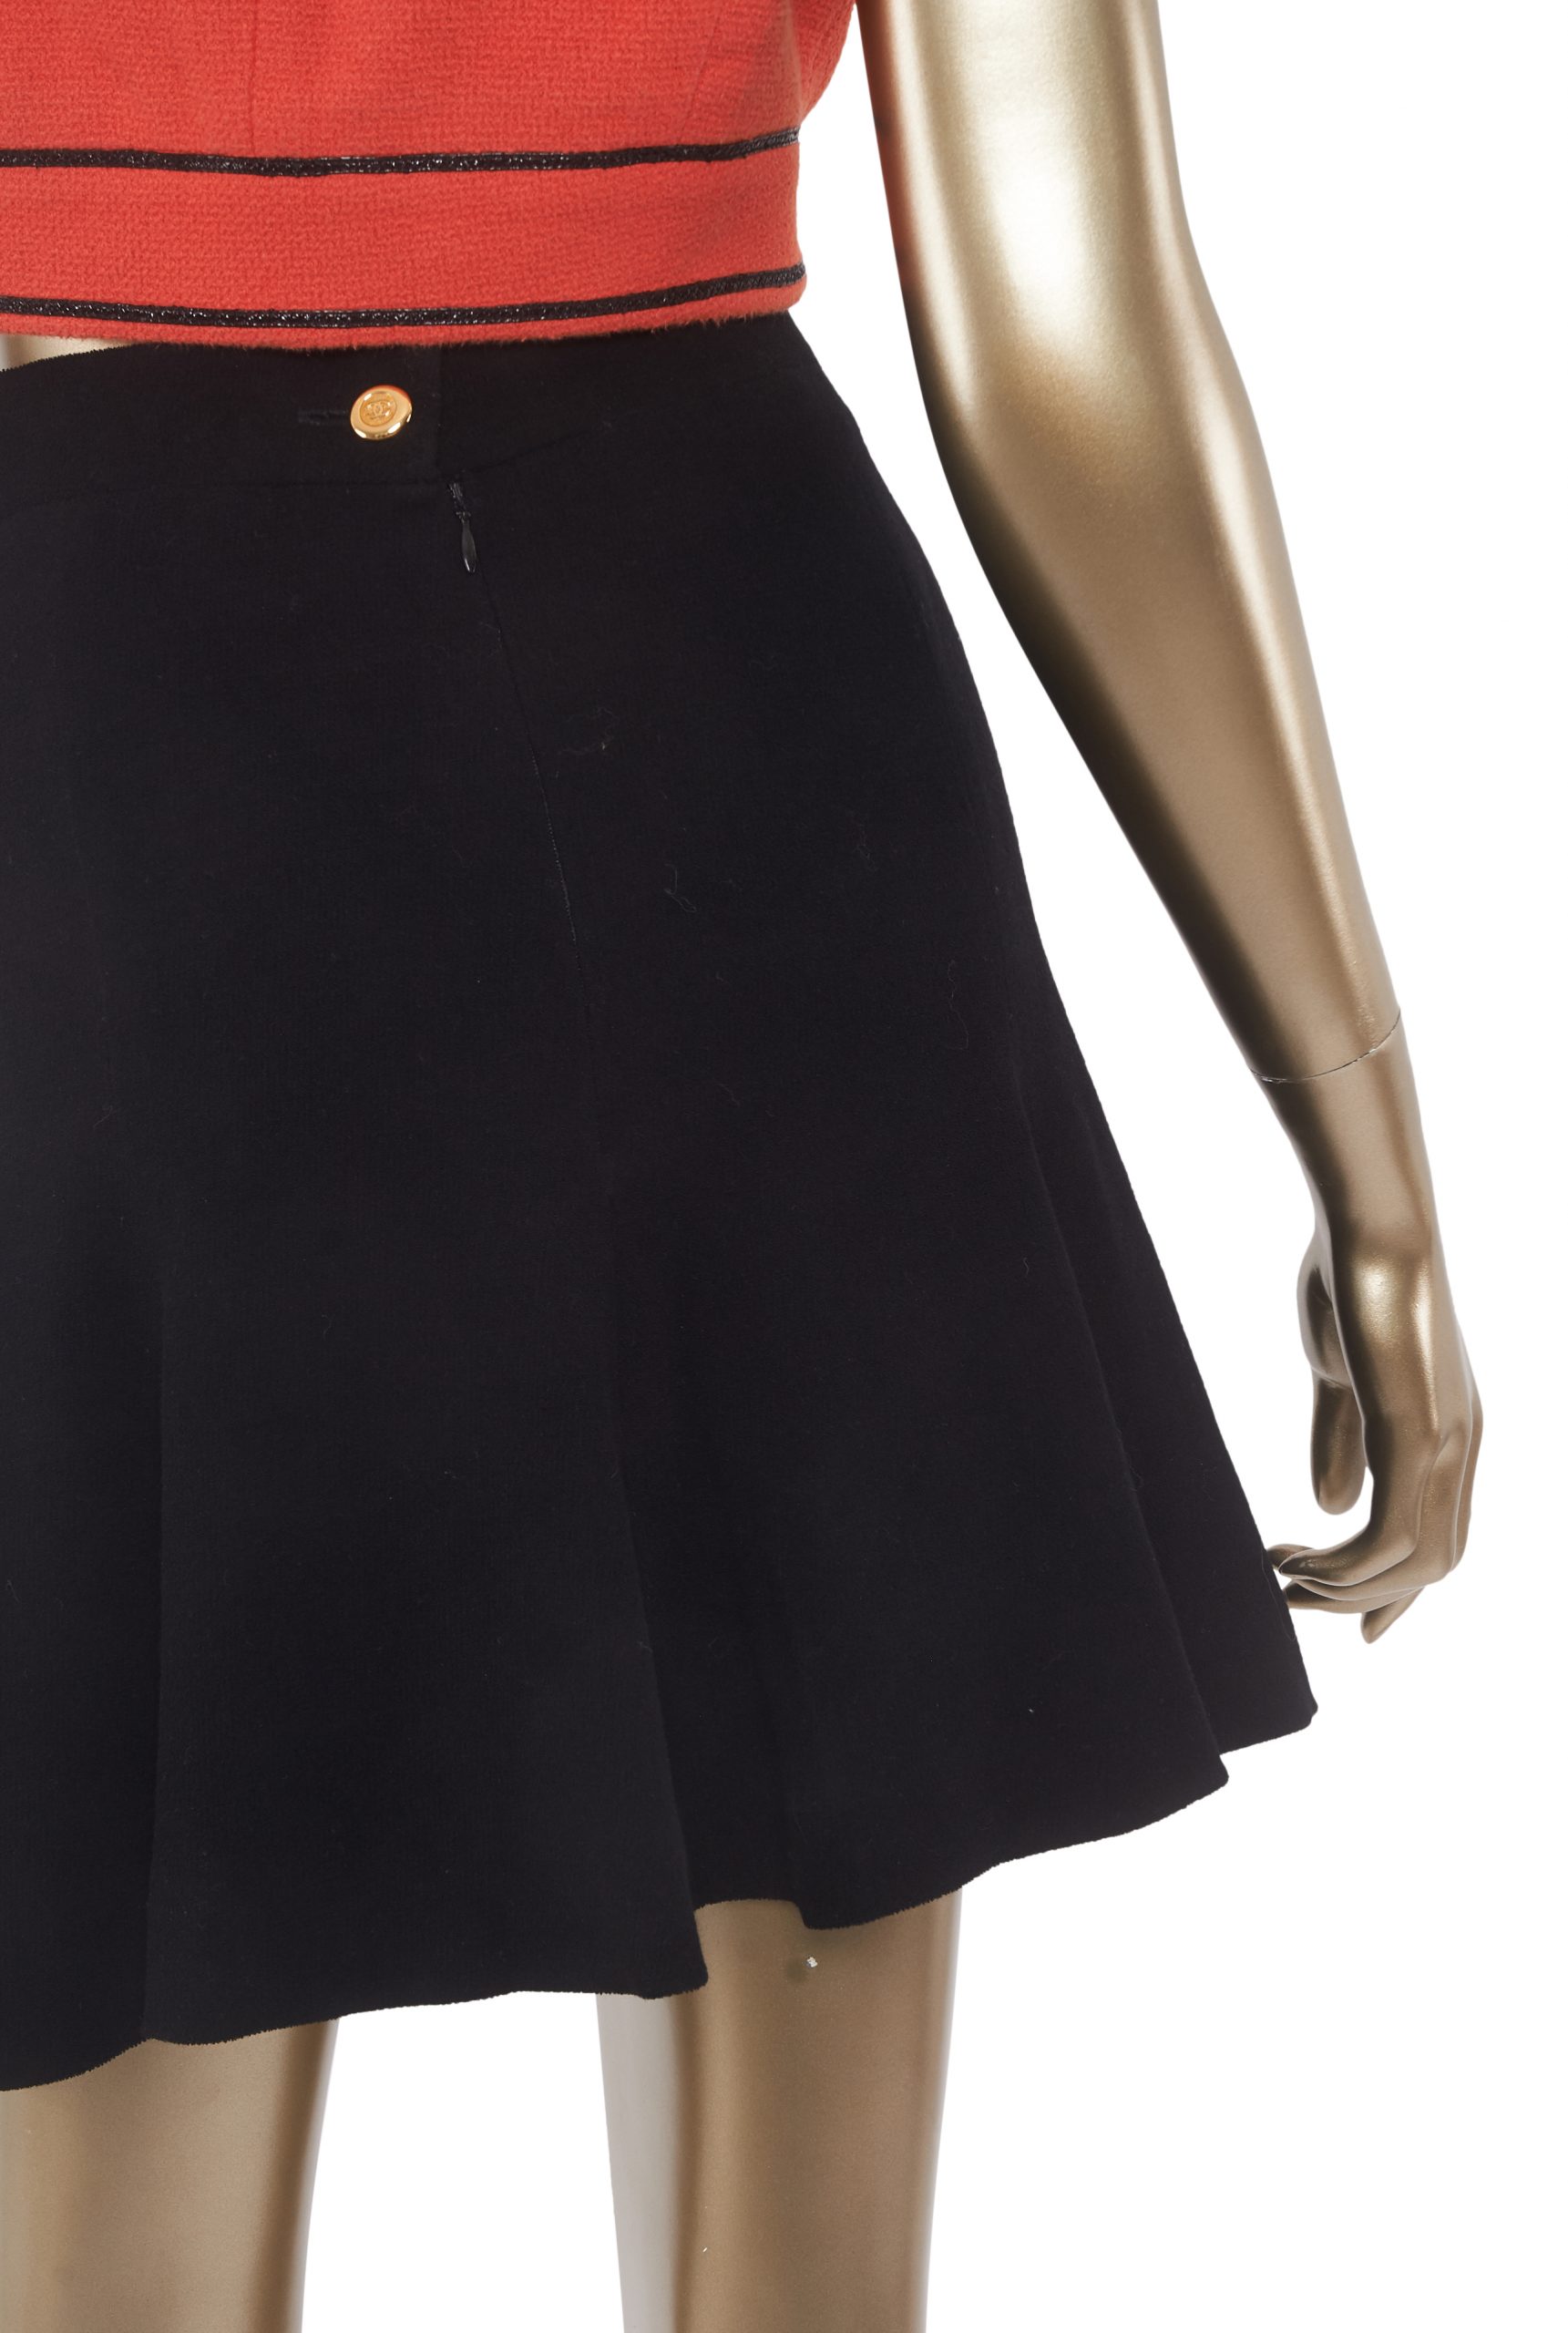 CHIC Vintage Chanel Style Suit Pattern VOGUE 8841, Jacket, Slim Skirt – A  Vintage shop